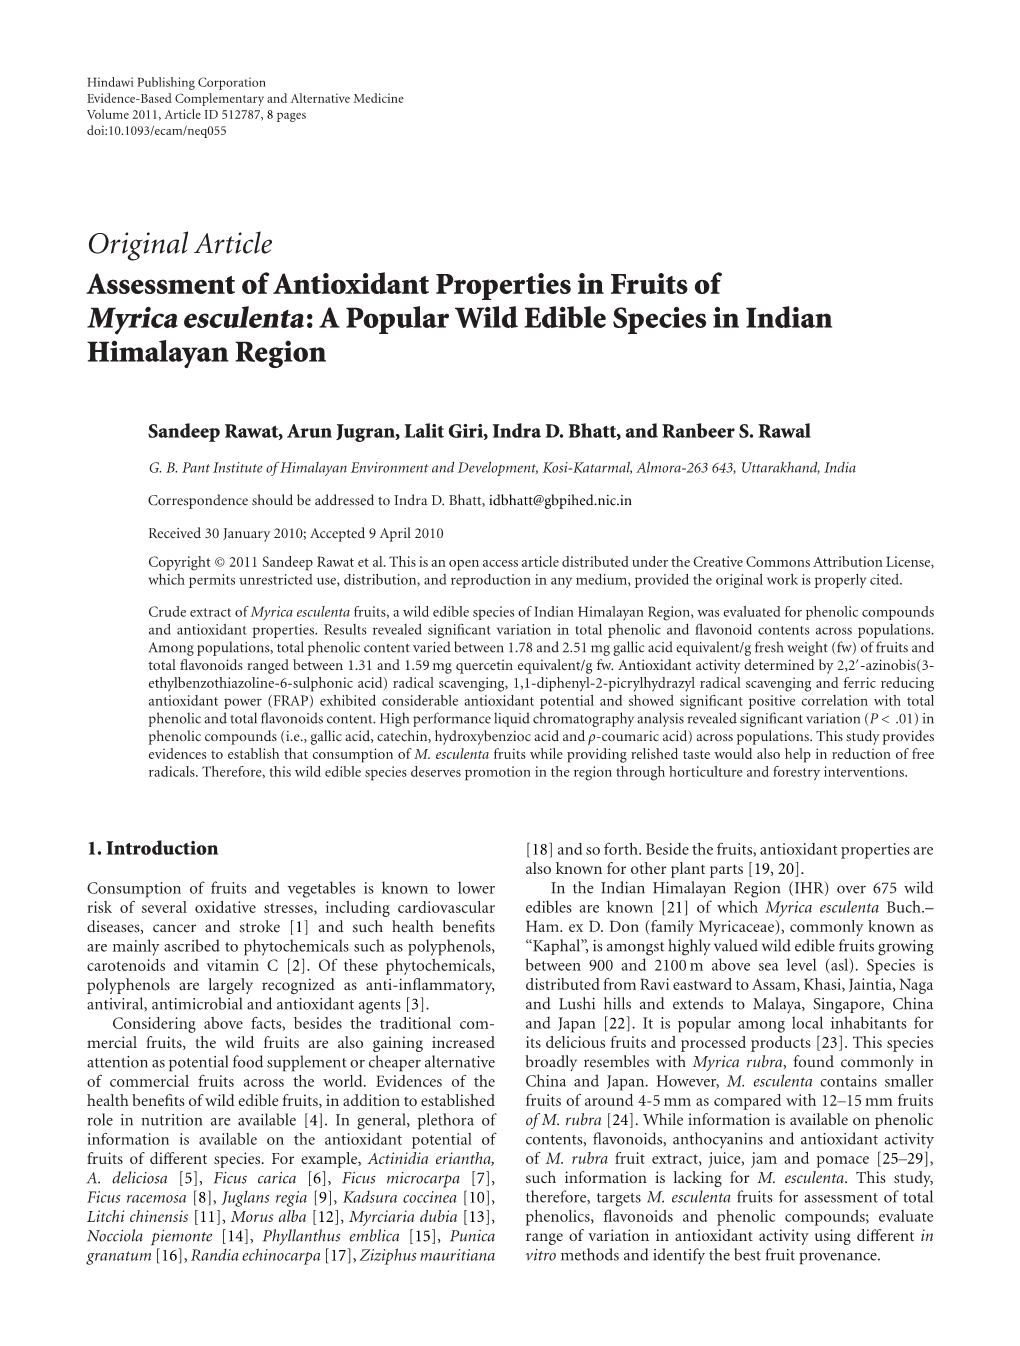 Assessment of Antioxidant Properties in Fruits of Myrica Esculenta: a Popular Wild Edible Species in Indian Himalayan Region